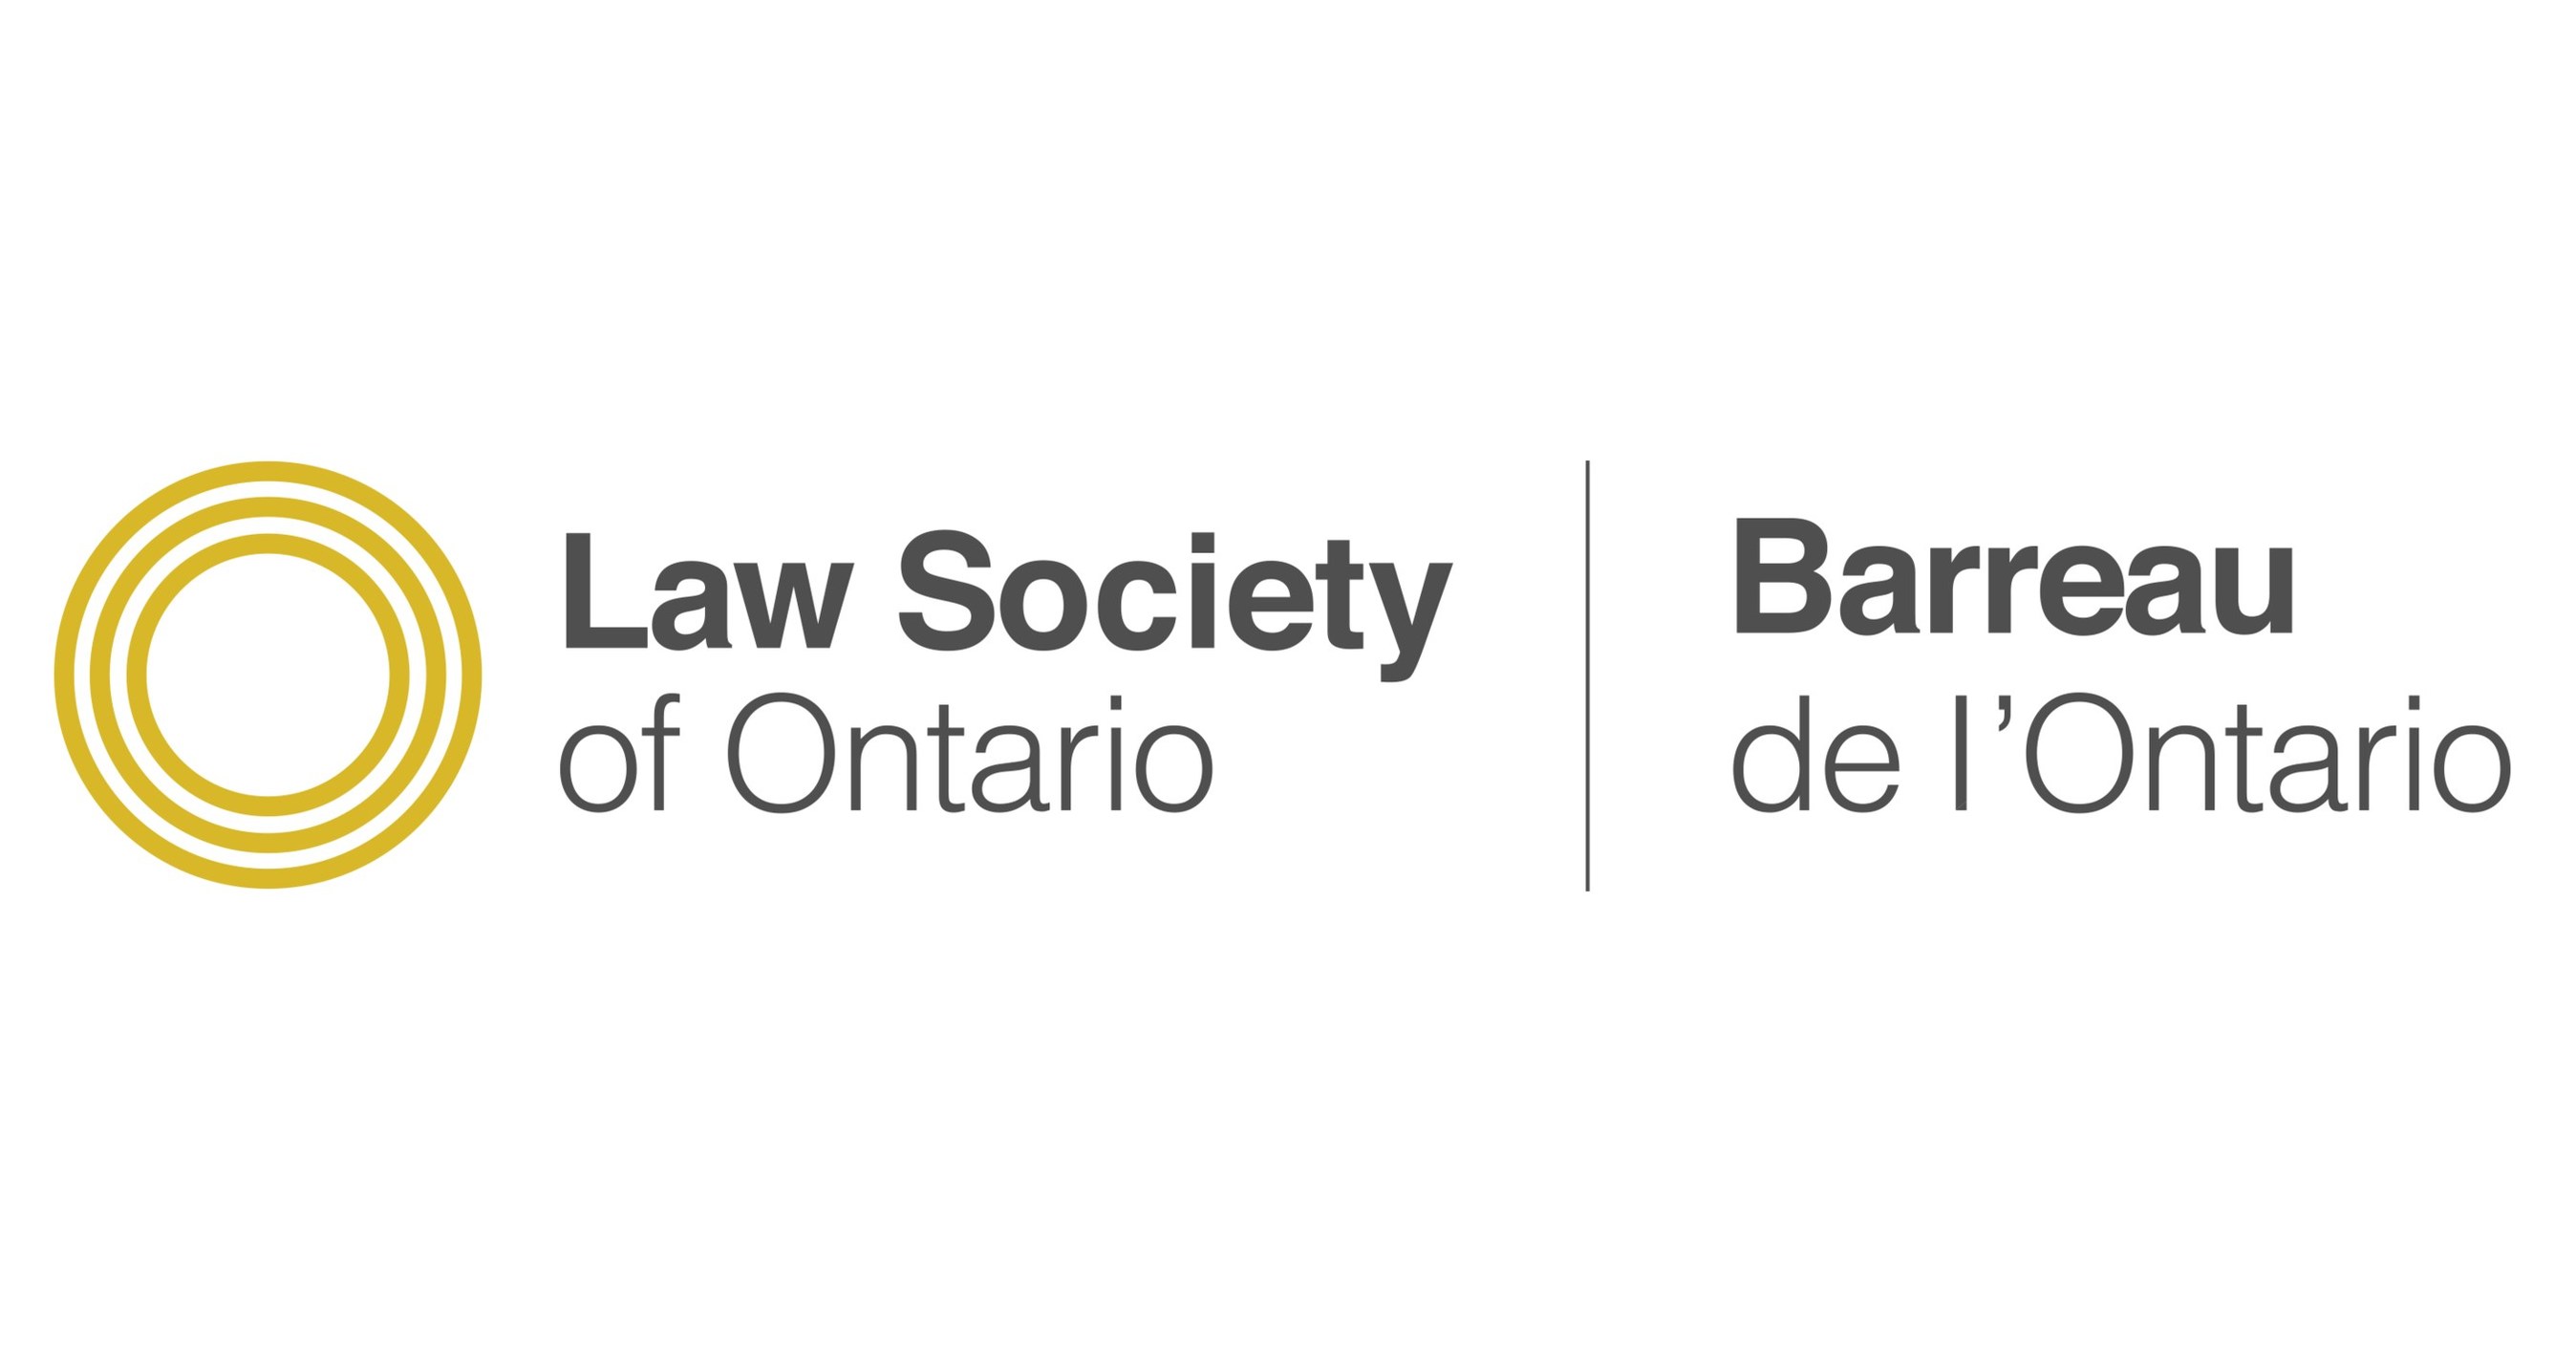 Law and society. Pro membership logo.